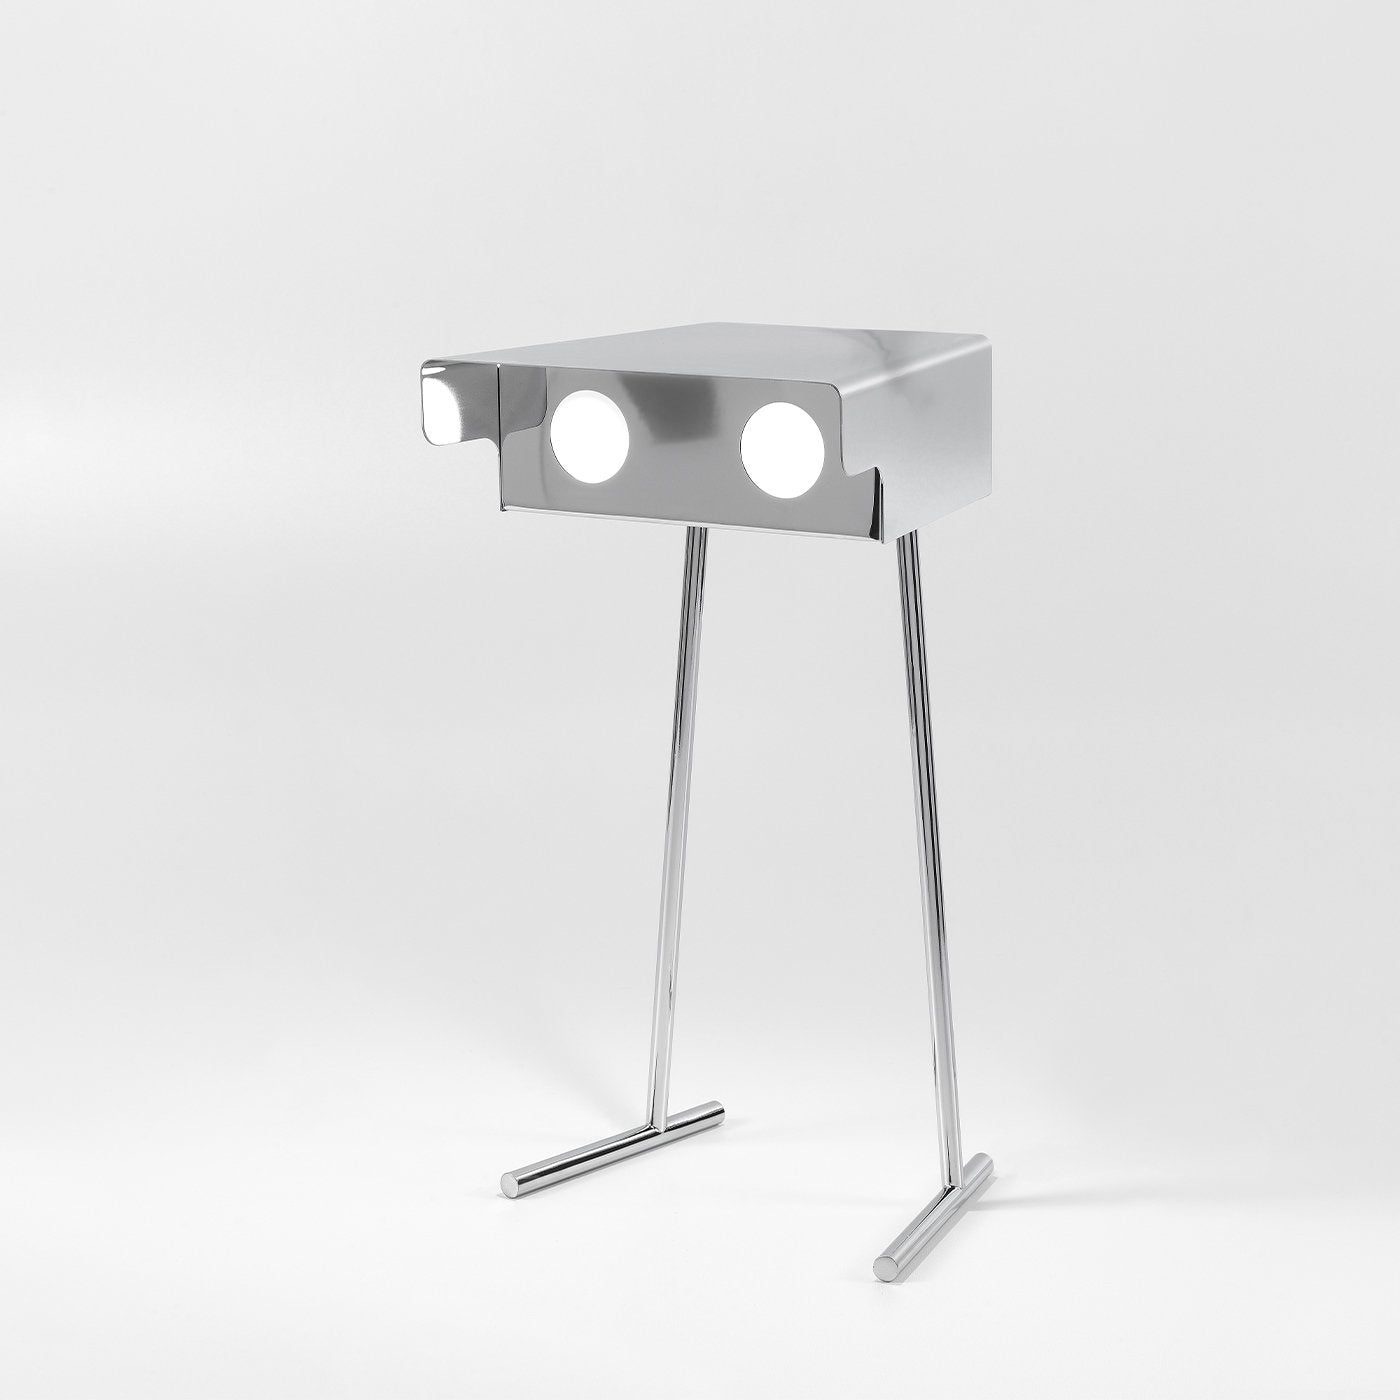 Betoo Table Lamp by Richard Hutten - Alternative view 3